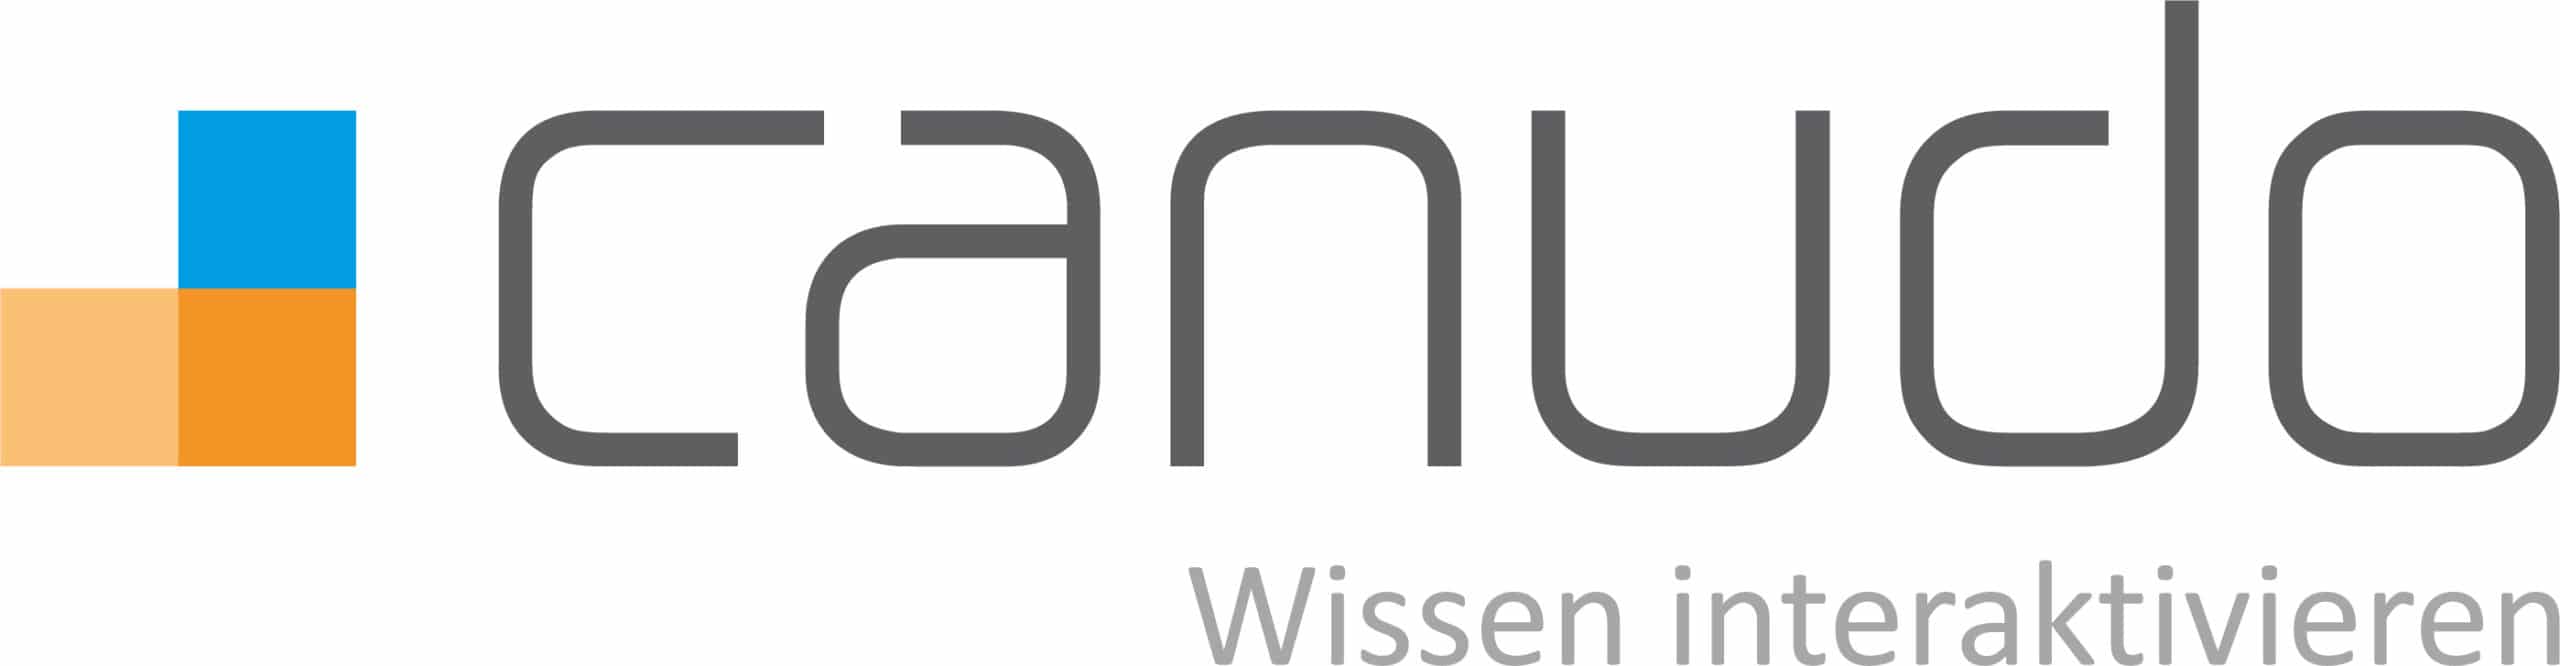 Canudo GmbH